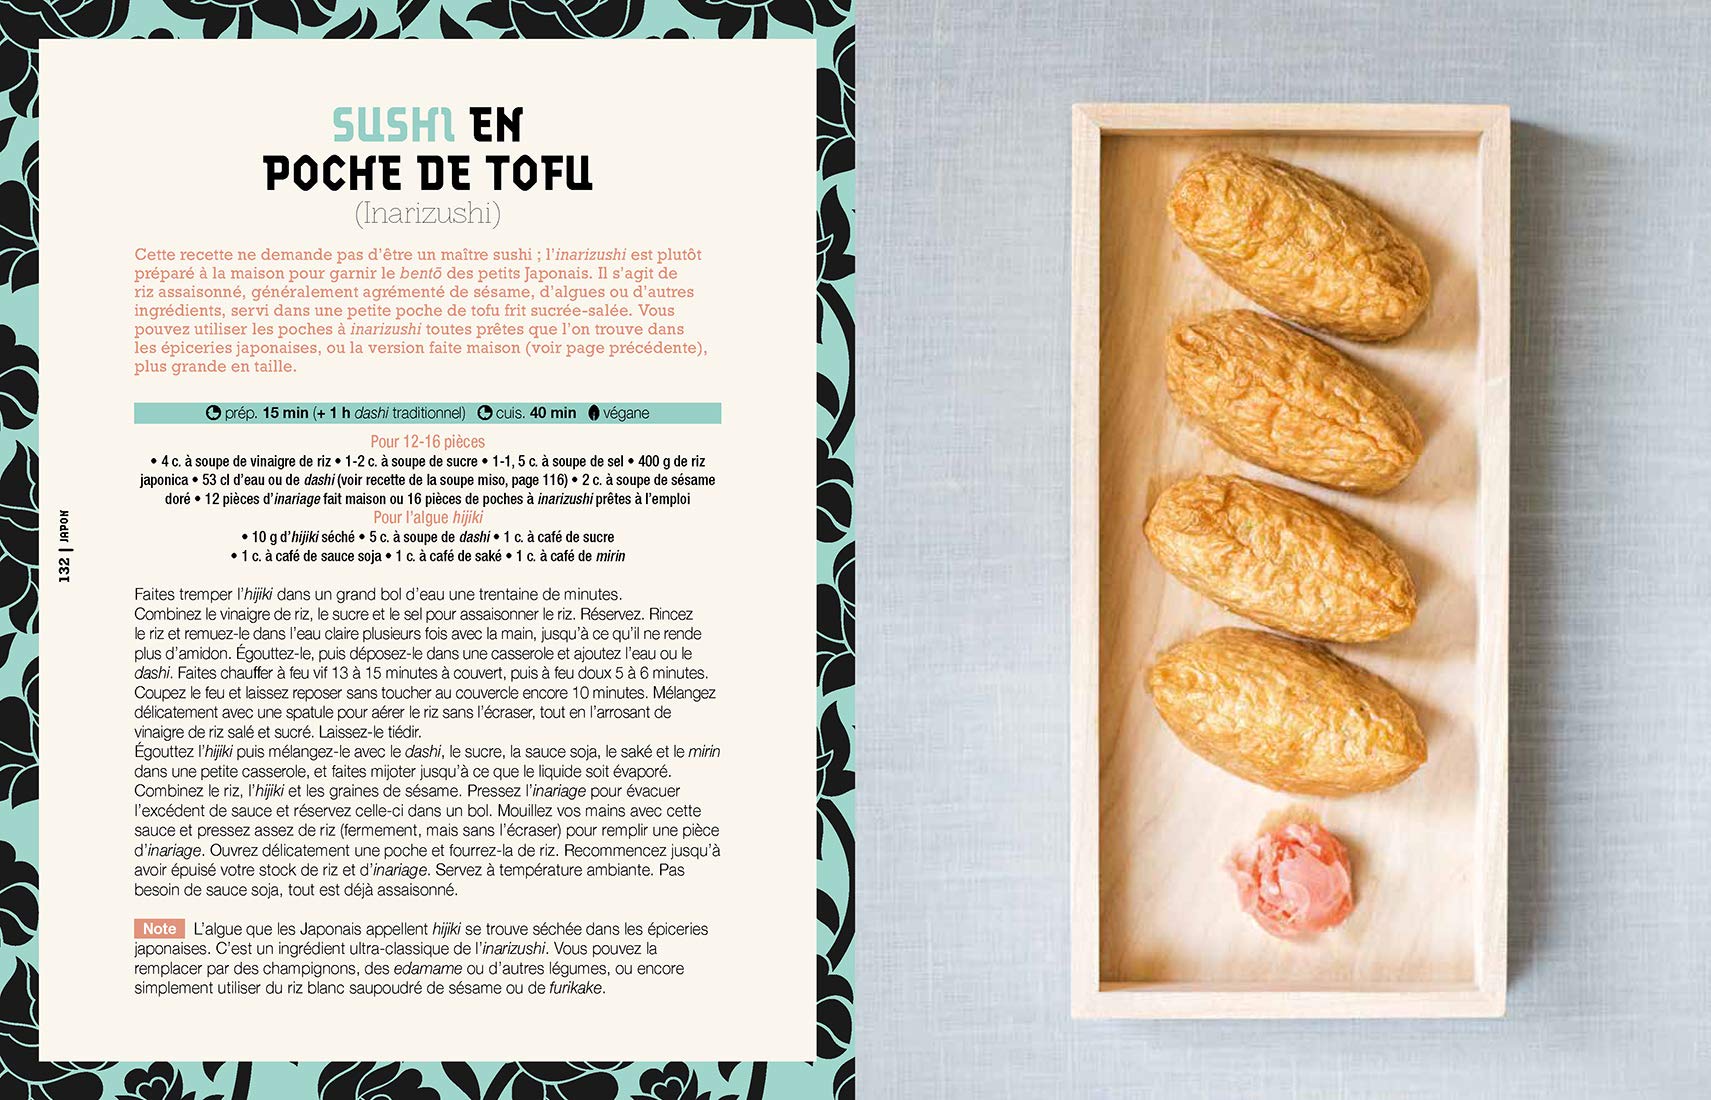 La Plage edition tofu: inside page